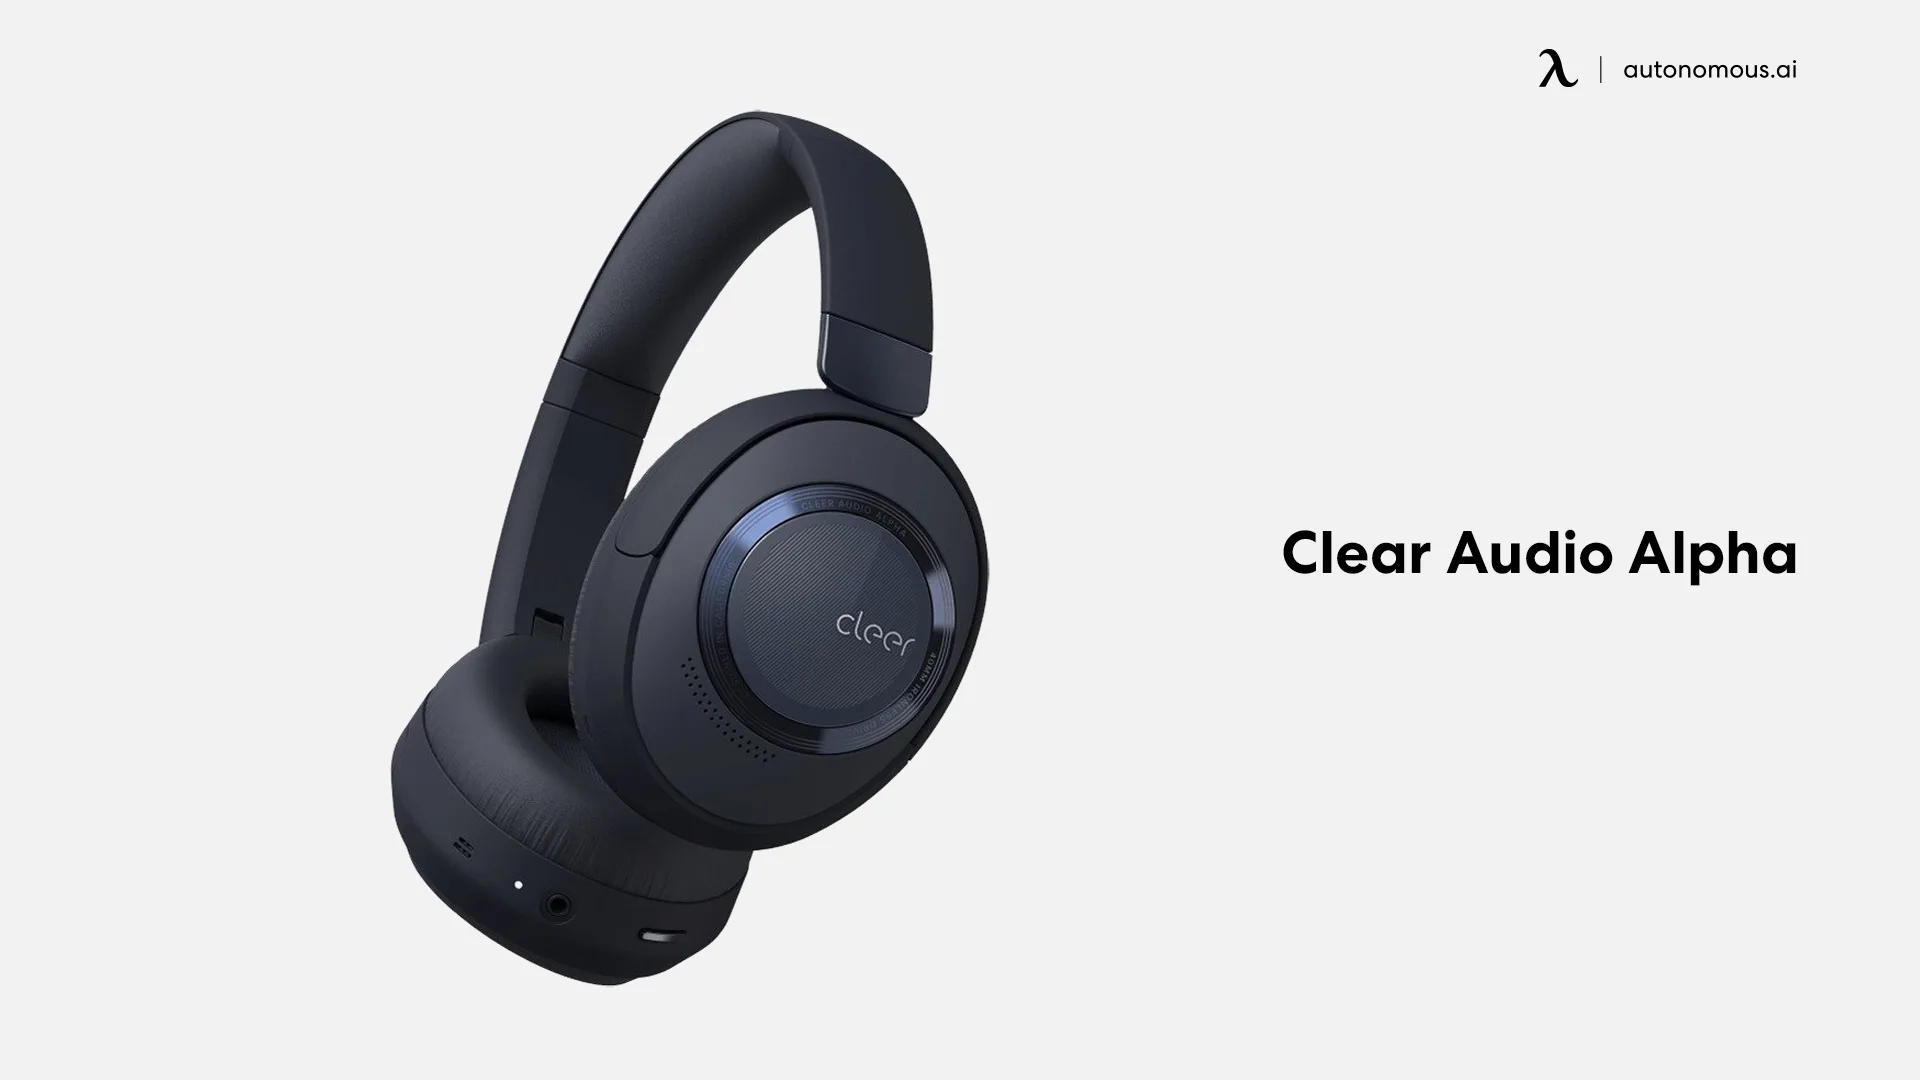 Clear Audio Alpha wireless noise-canceling headphones